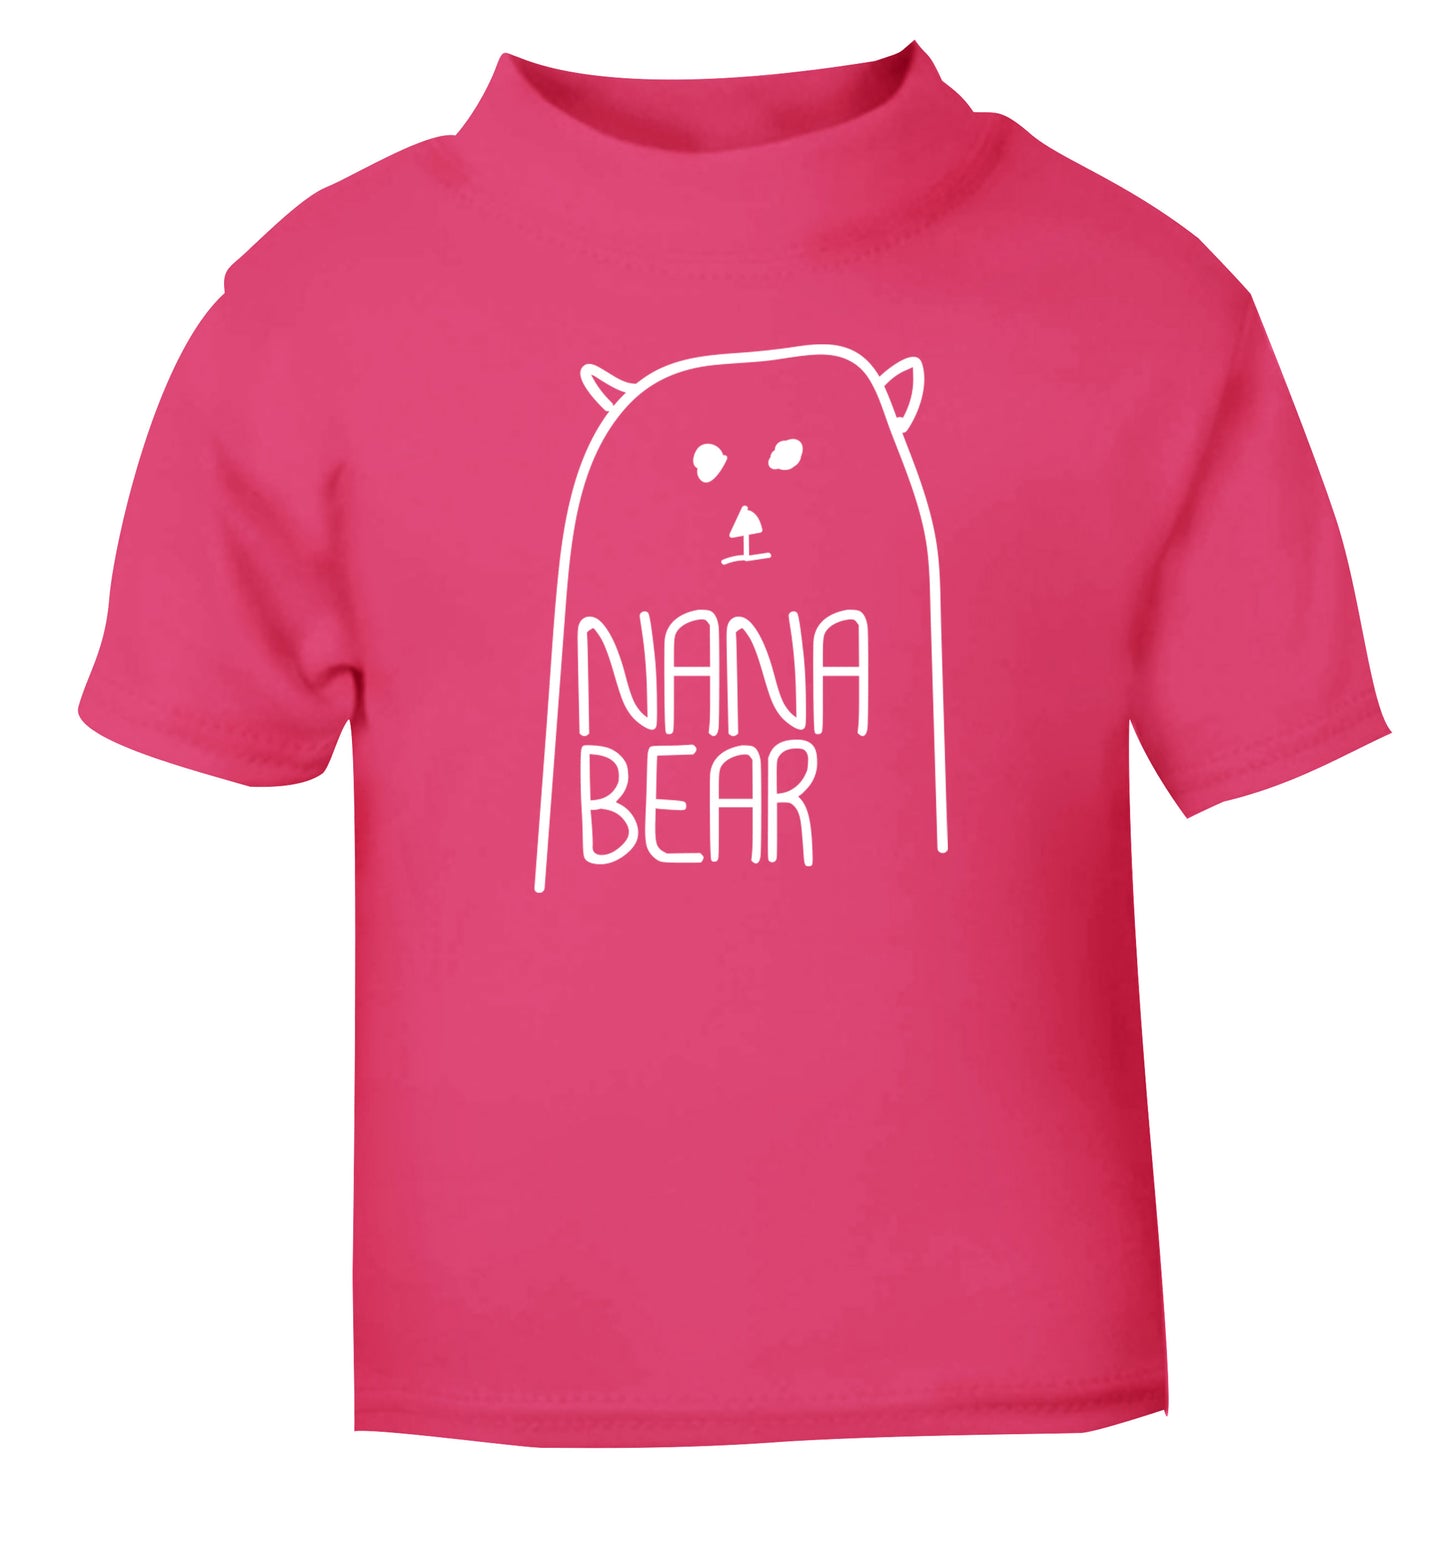 Nana bear pink Baby Toddler Tshirt 2 Years